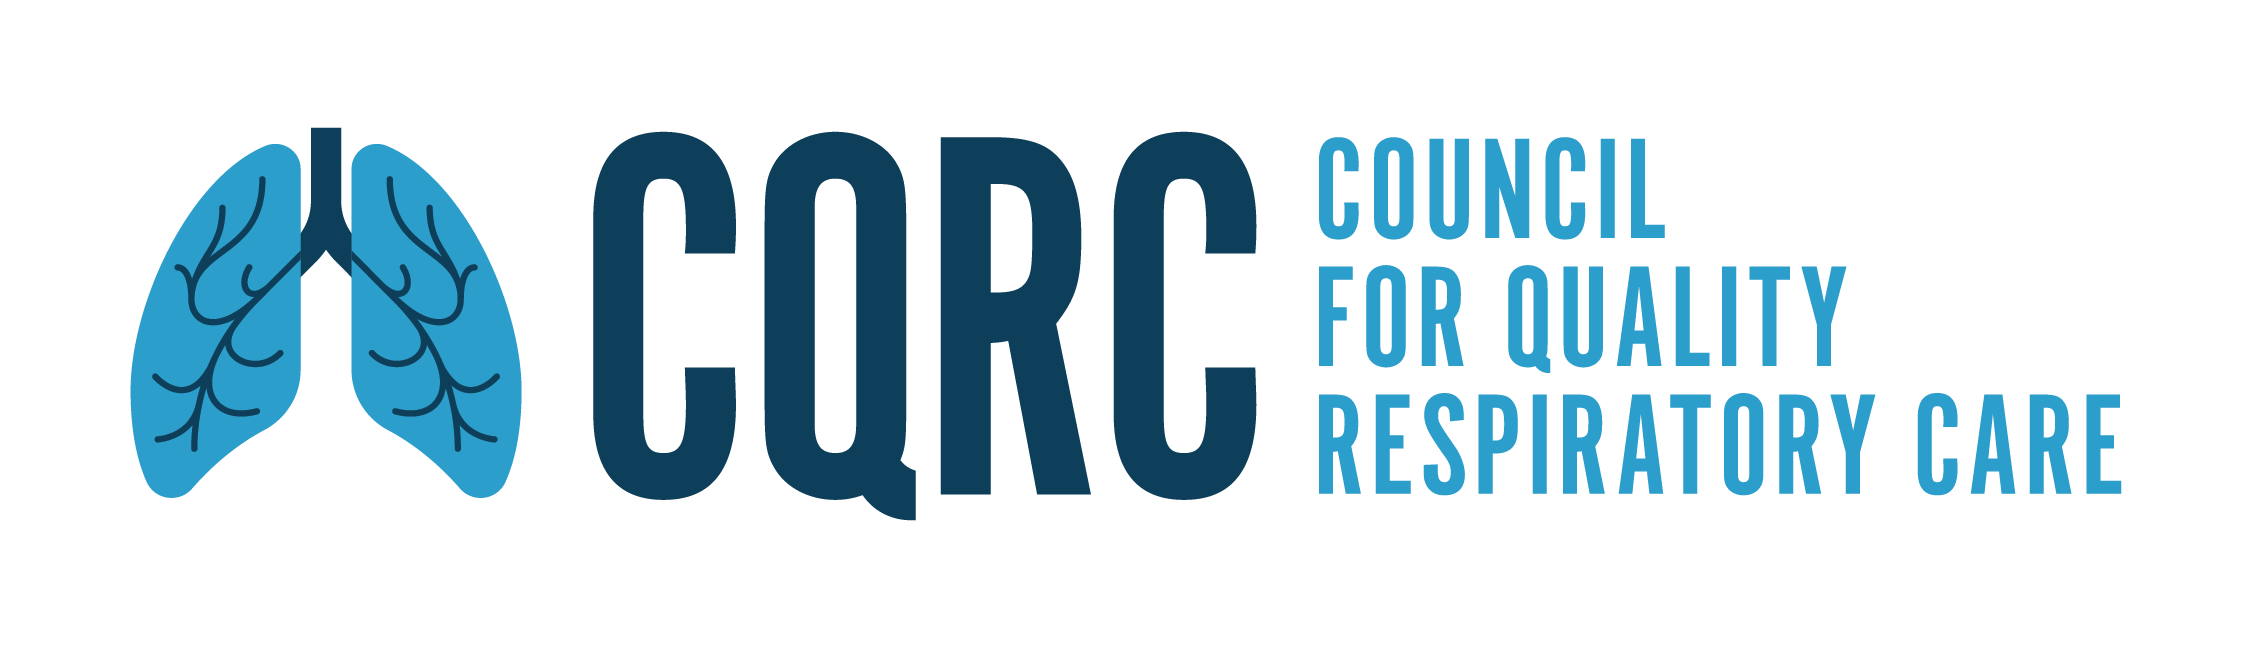 CQRC Logo Horiz LG